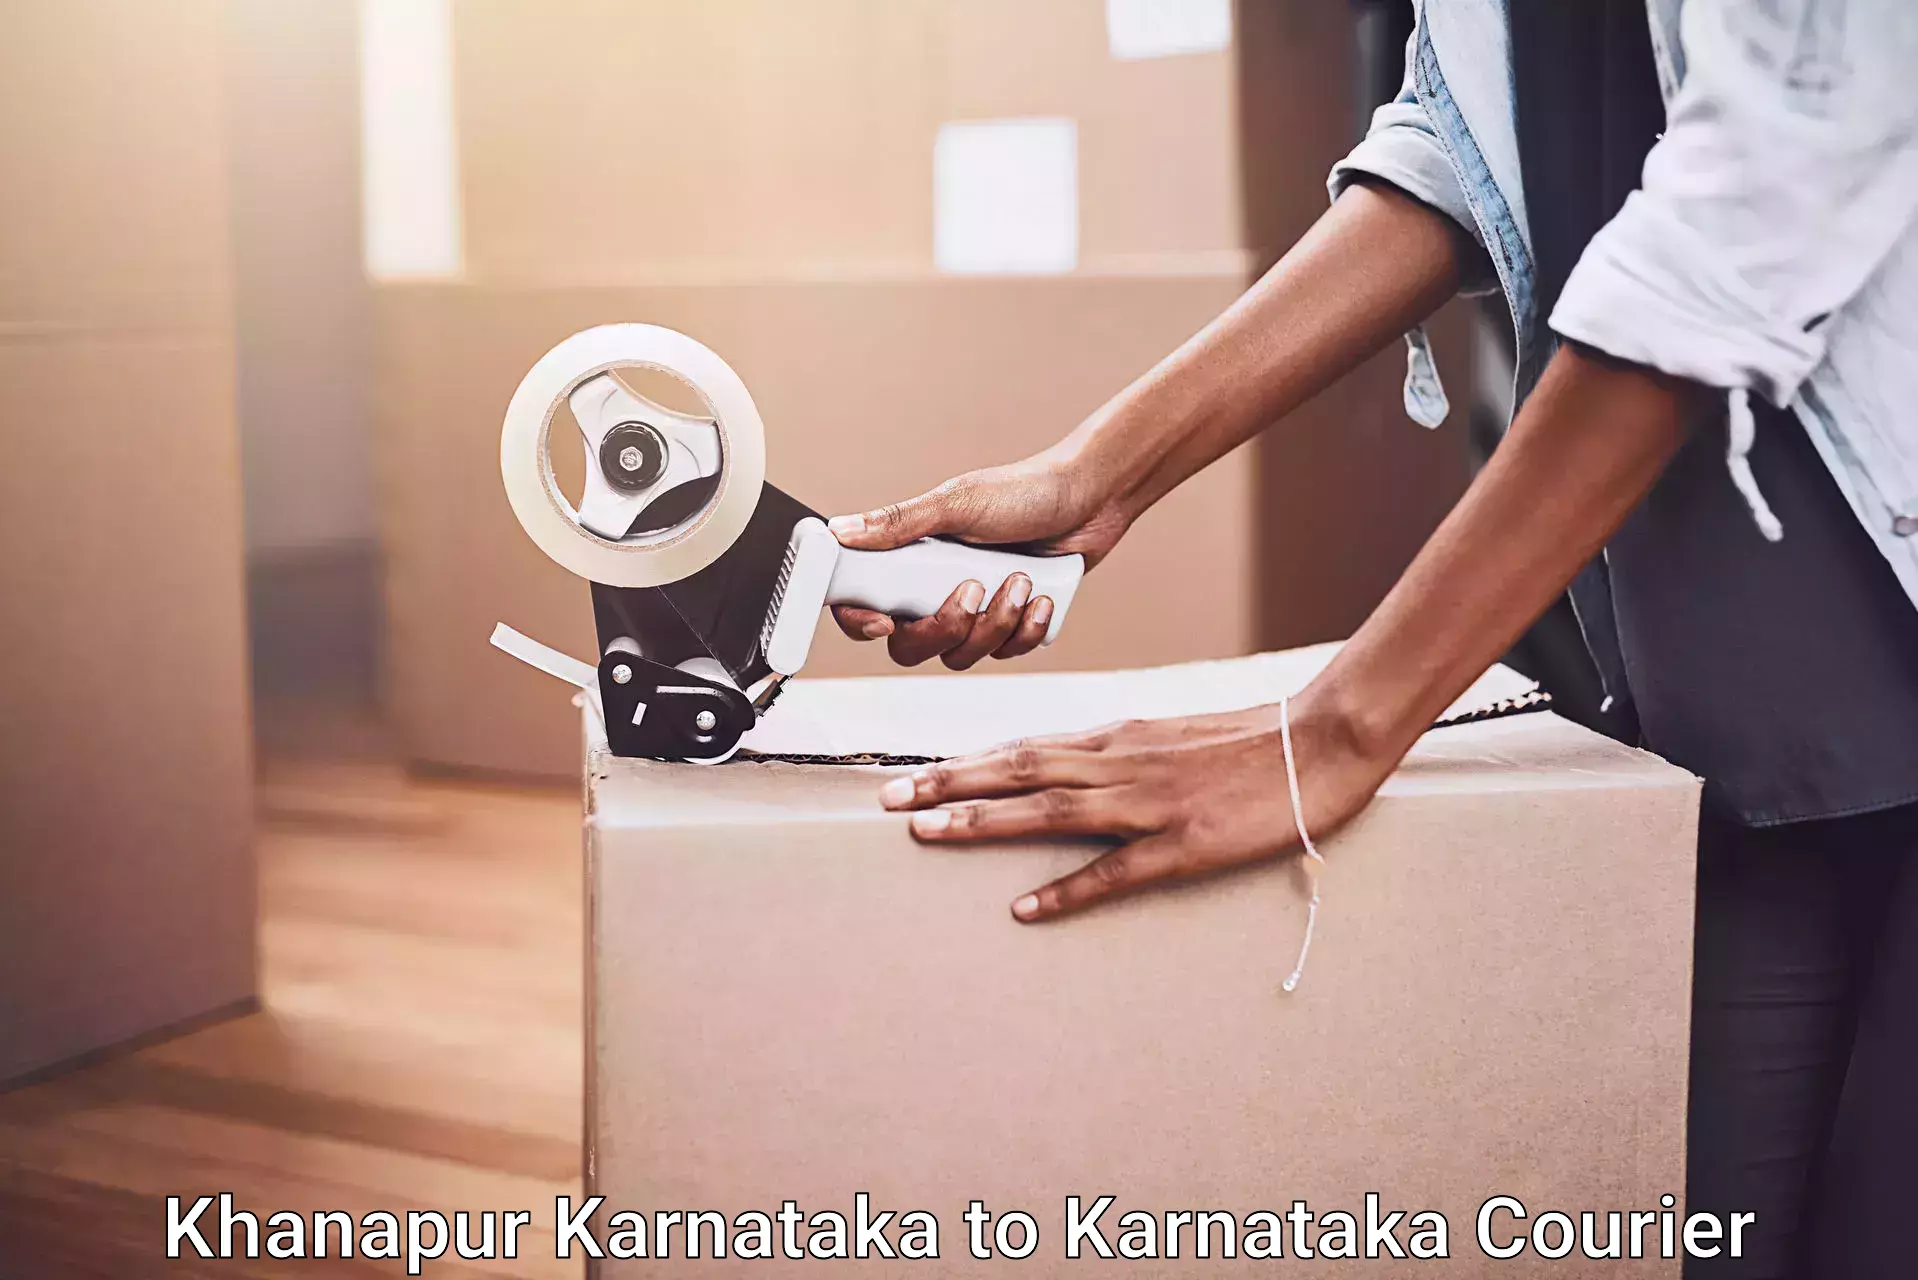 Skilled furniture movers Khanapur Karnataka to Mangalore